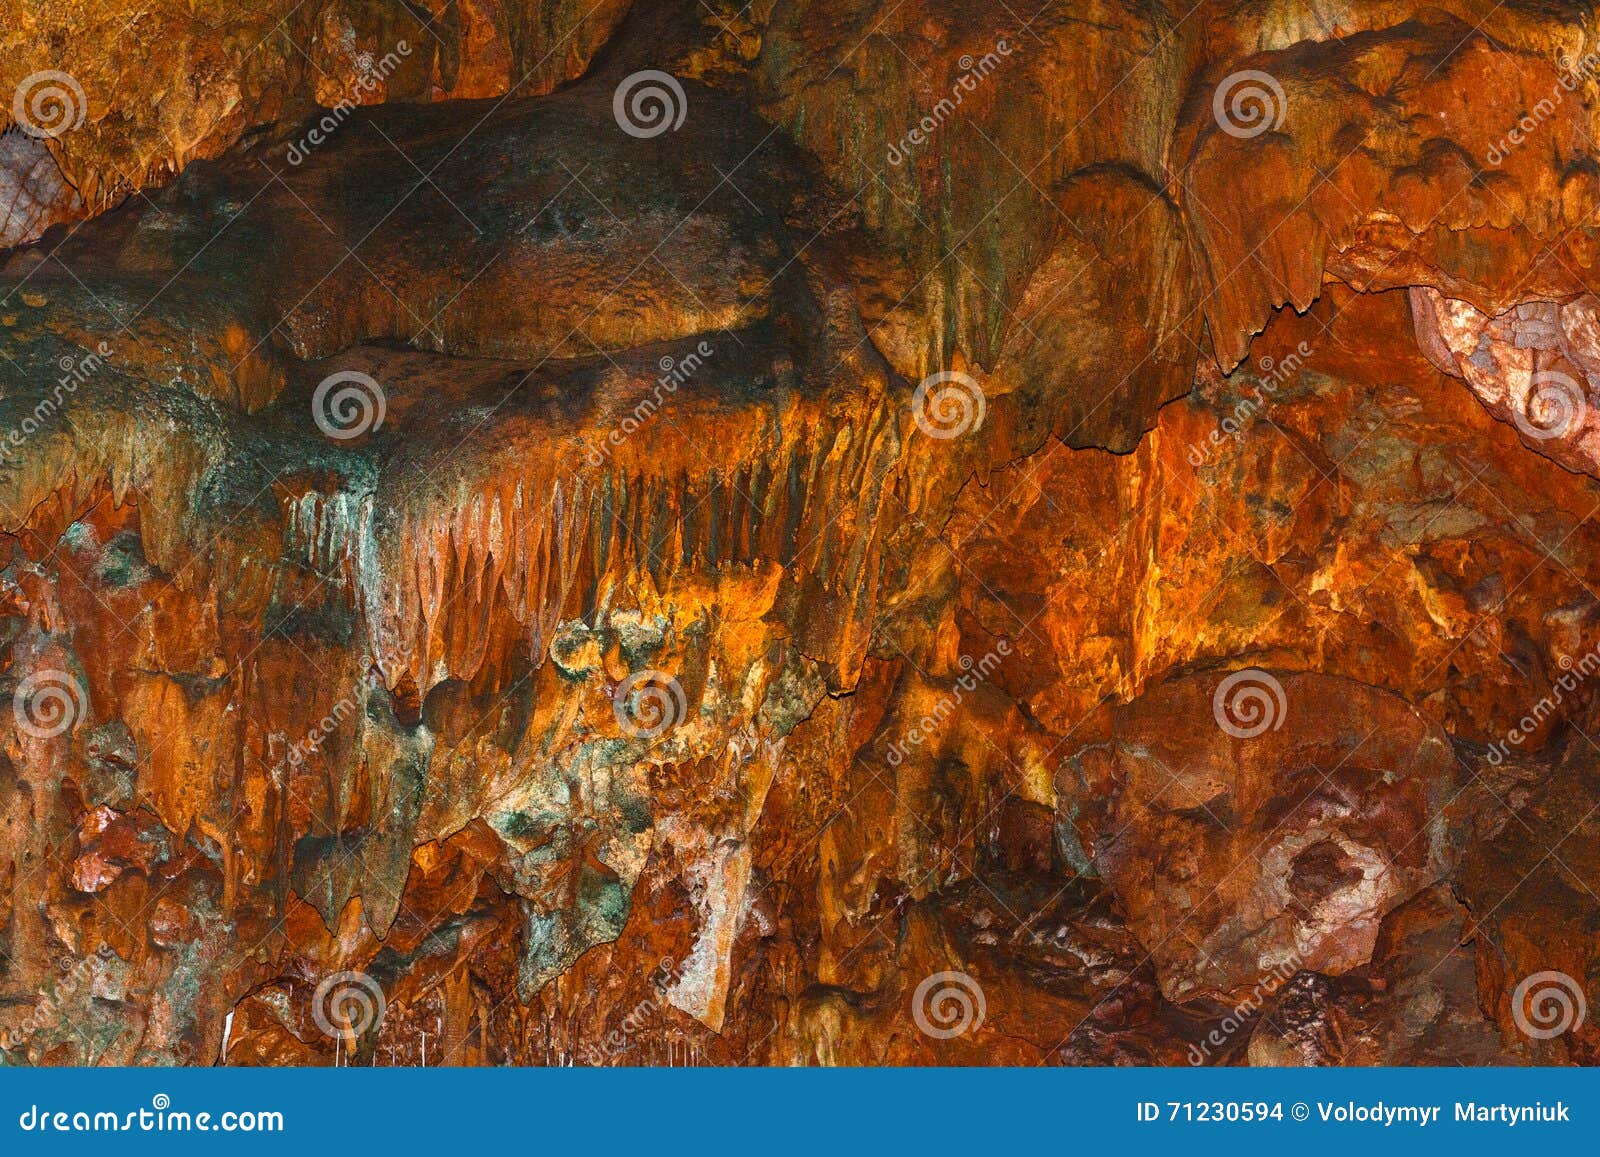 view of the stalactites and stalagmites in damlatas caves. alania. turkey.